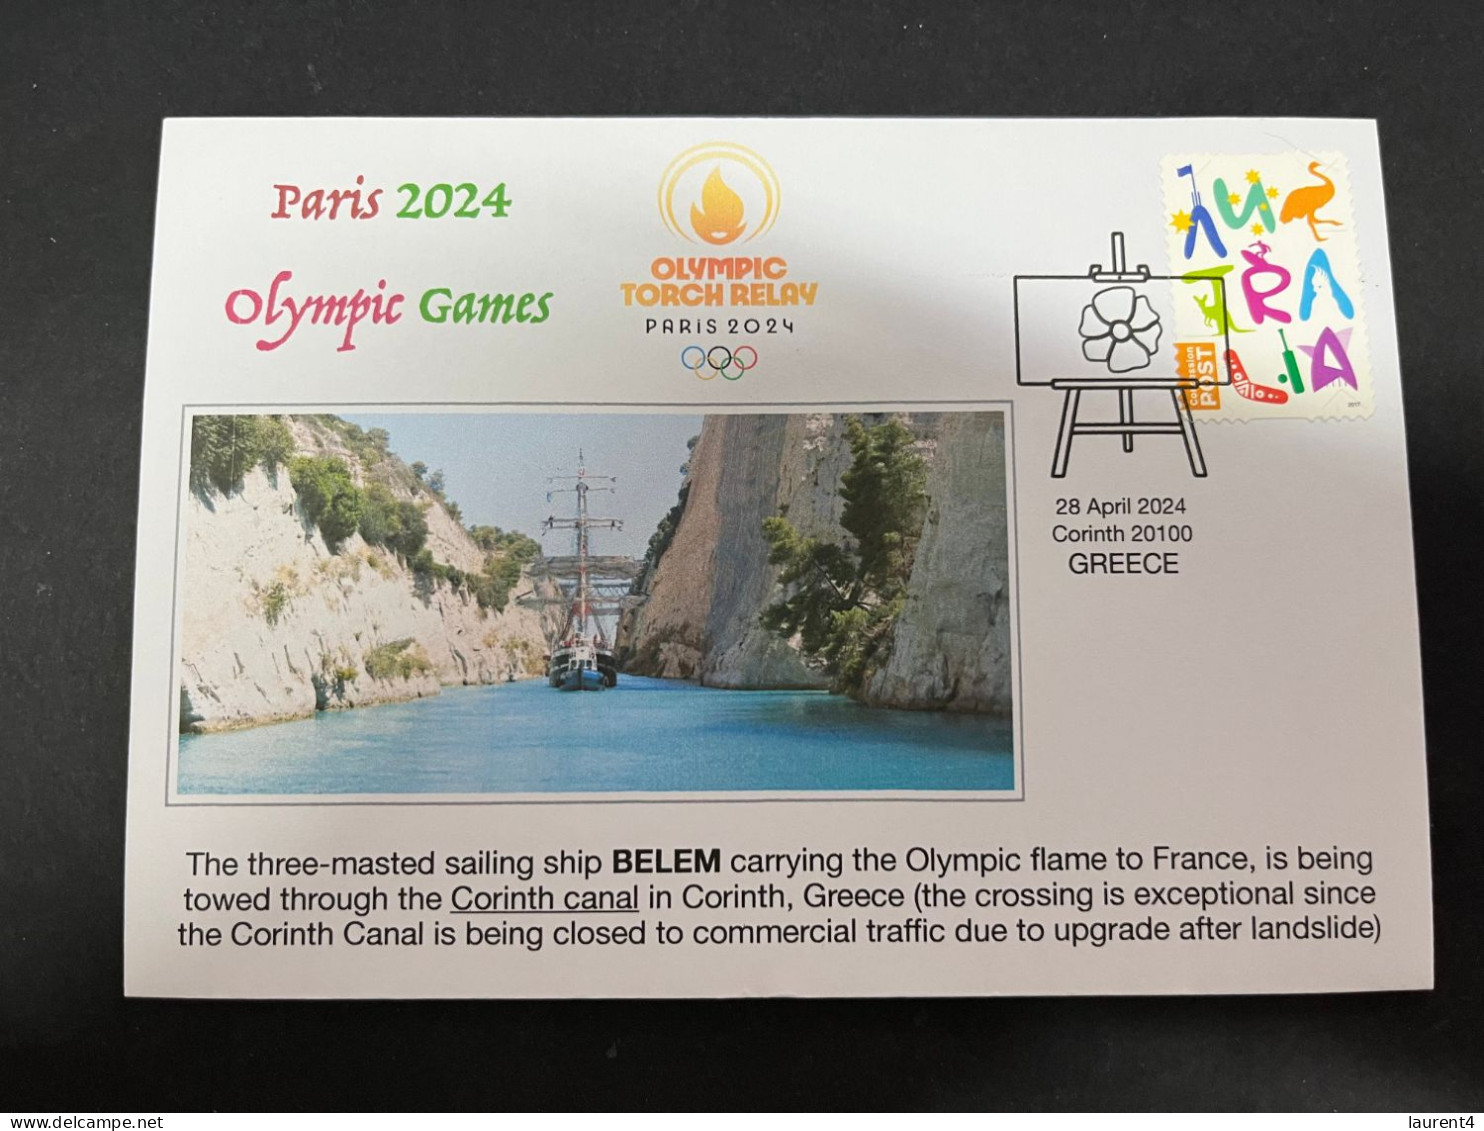 5-5-2024 (4 Z 12 B) Paris Olympic Games 2024 - The Olympic Flame Travel On Sail Ship BELEM Via The Corinth Canal (OZ) - Eté 2024 : Paris